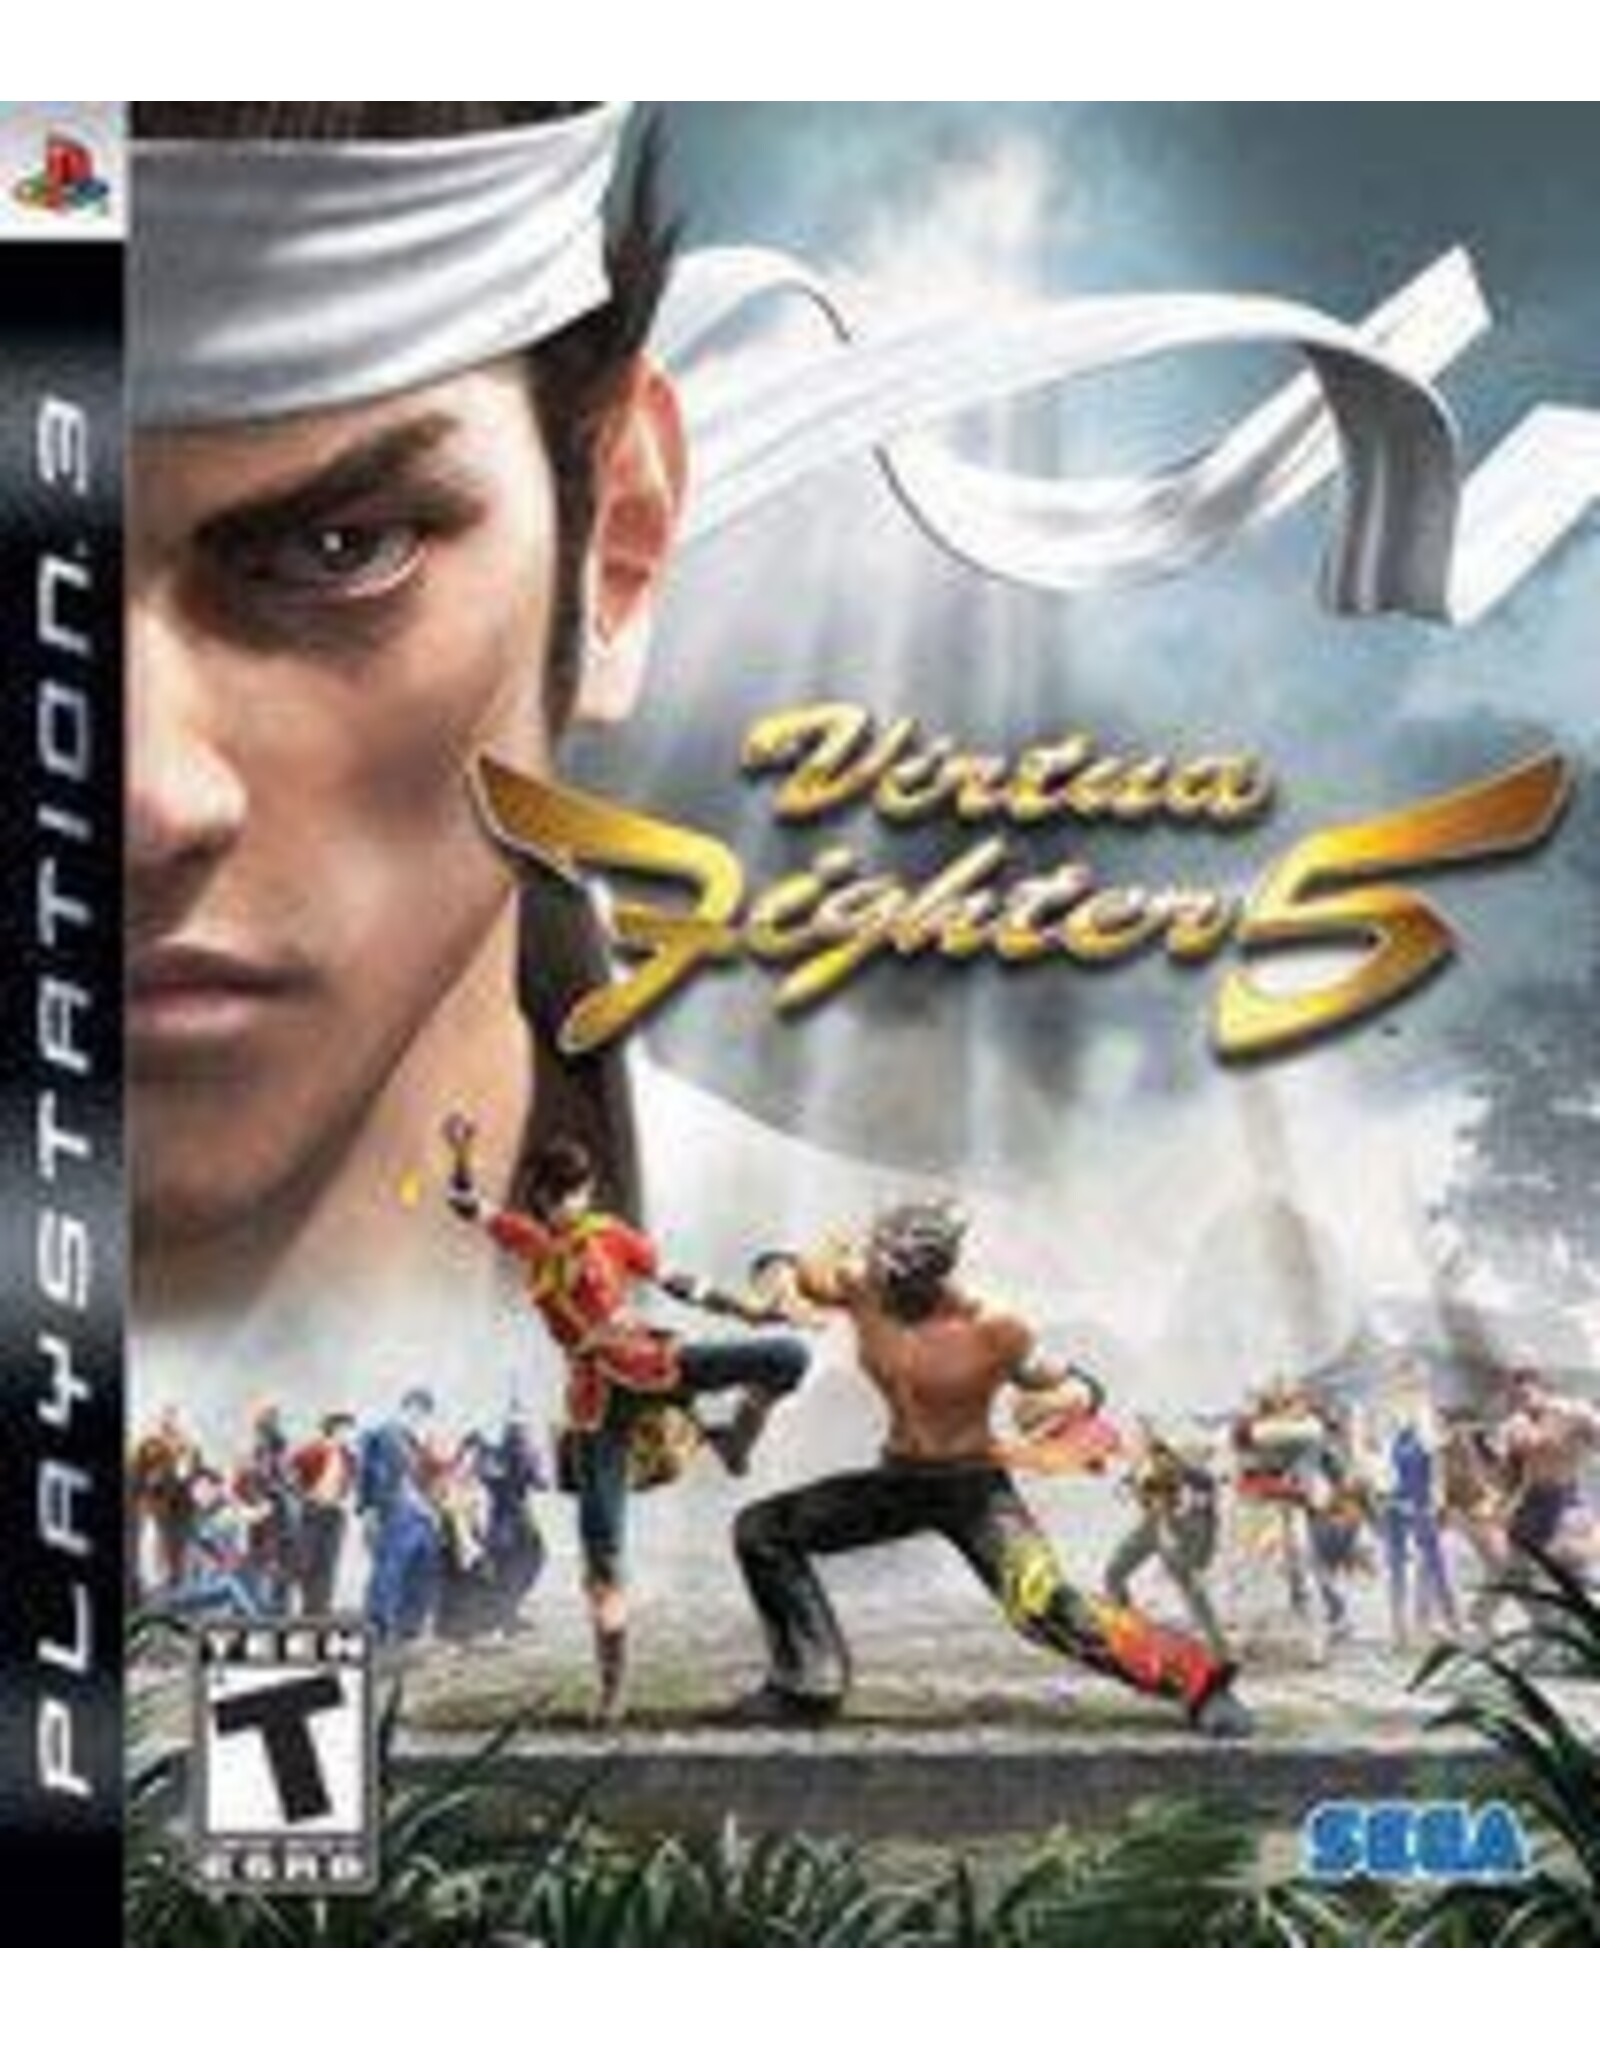 Playstation 3 Virtua Fighter 5 (No Manual)